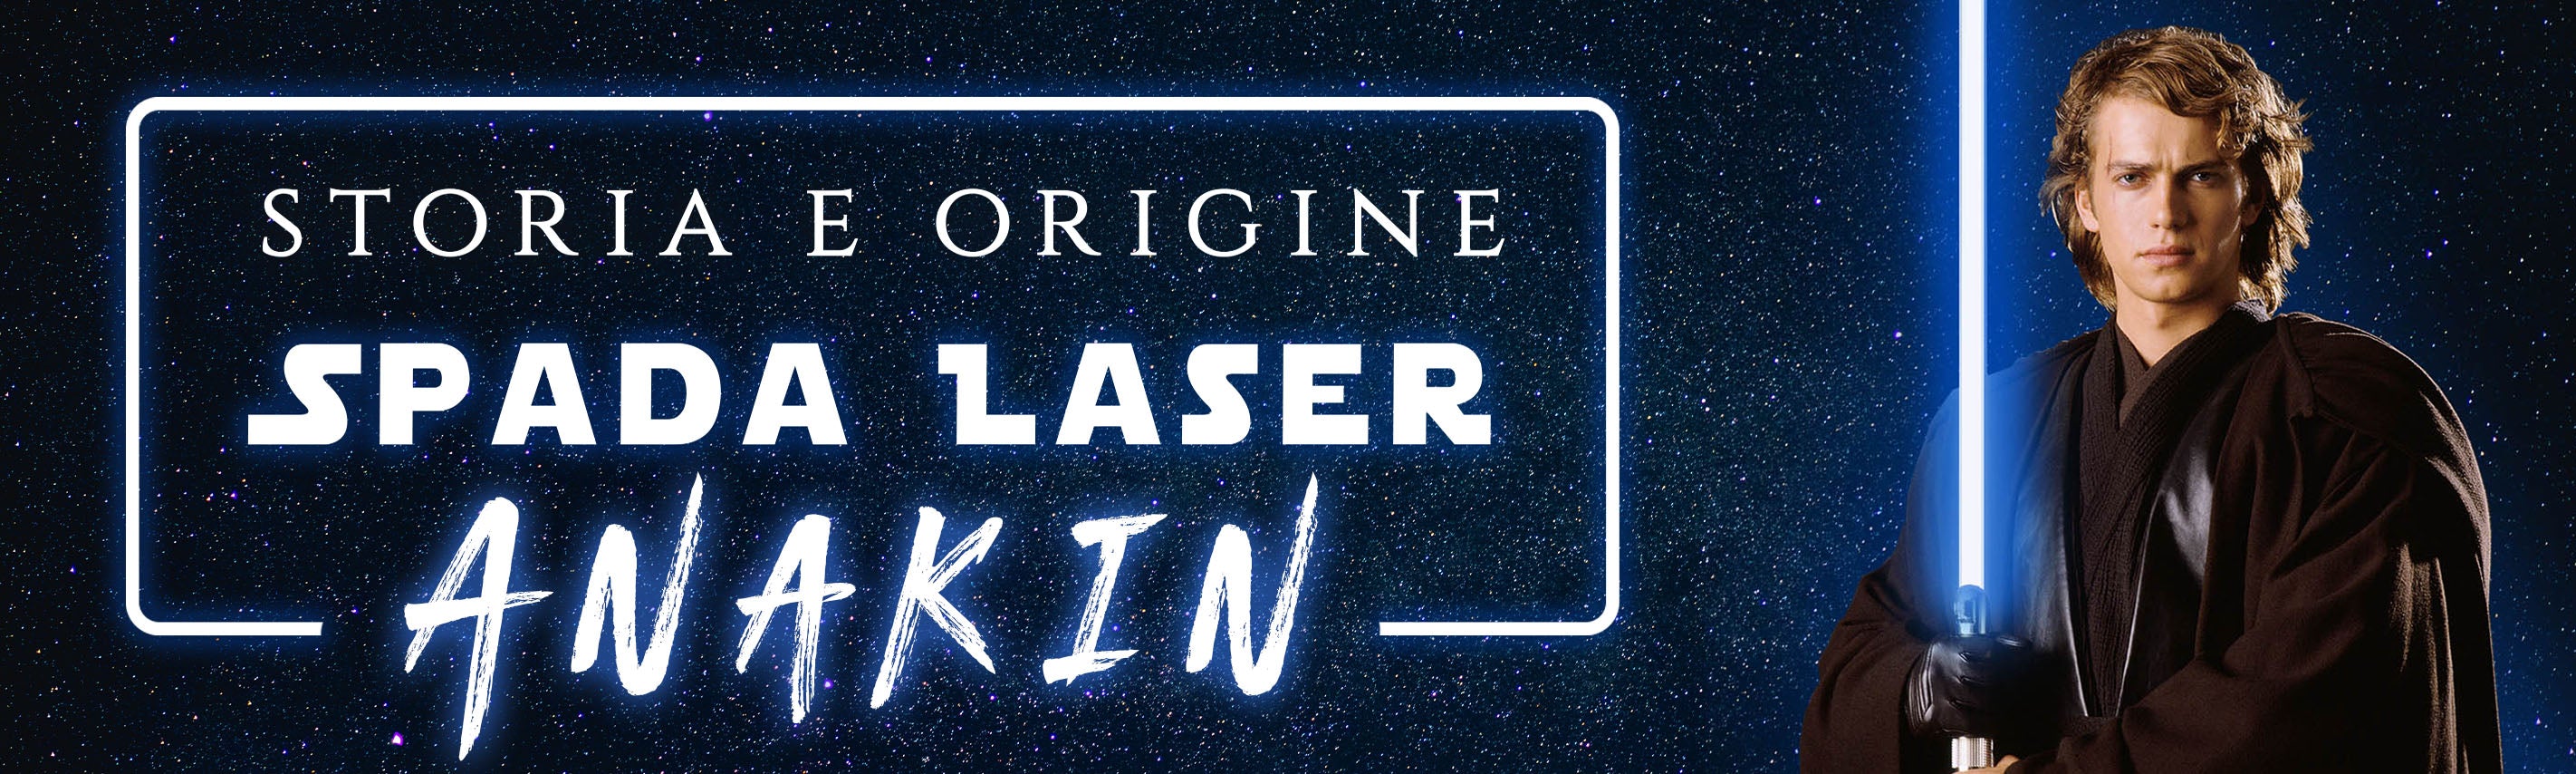 Spada laser azzurra Star Wars adulto Anakin Skywalker ufficiale Disney